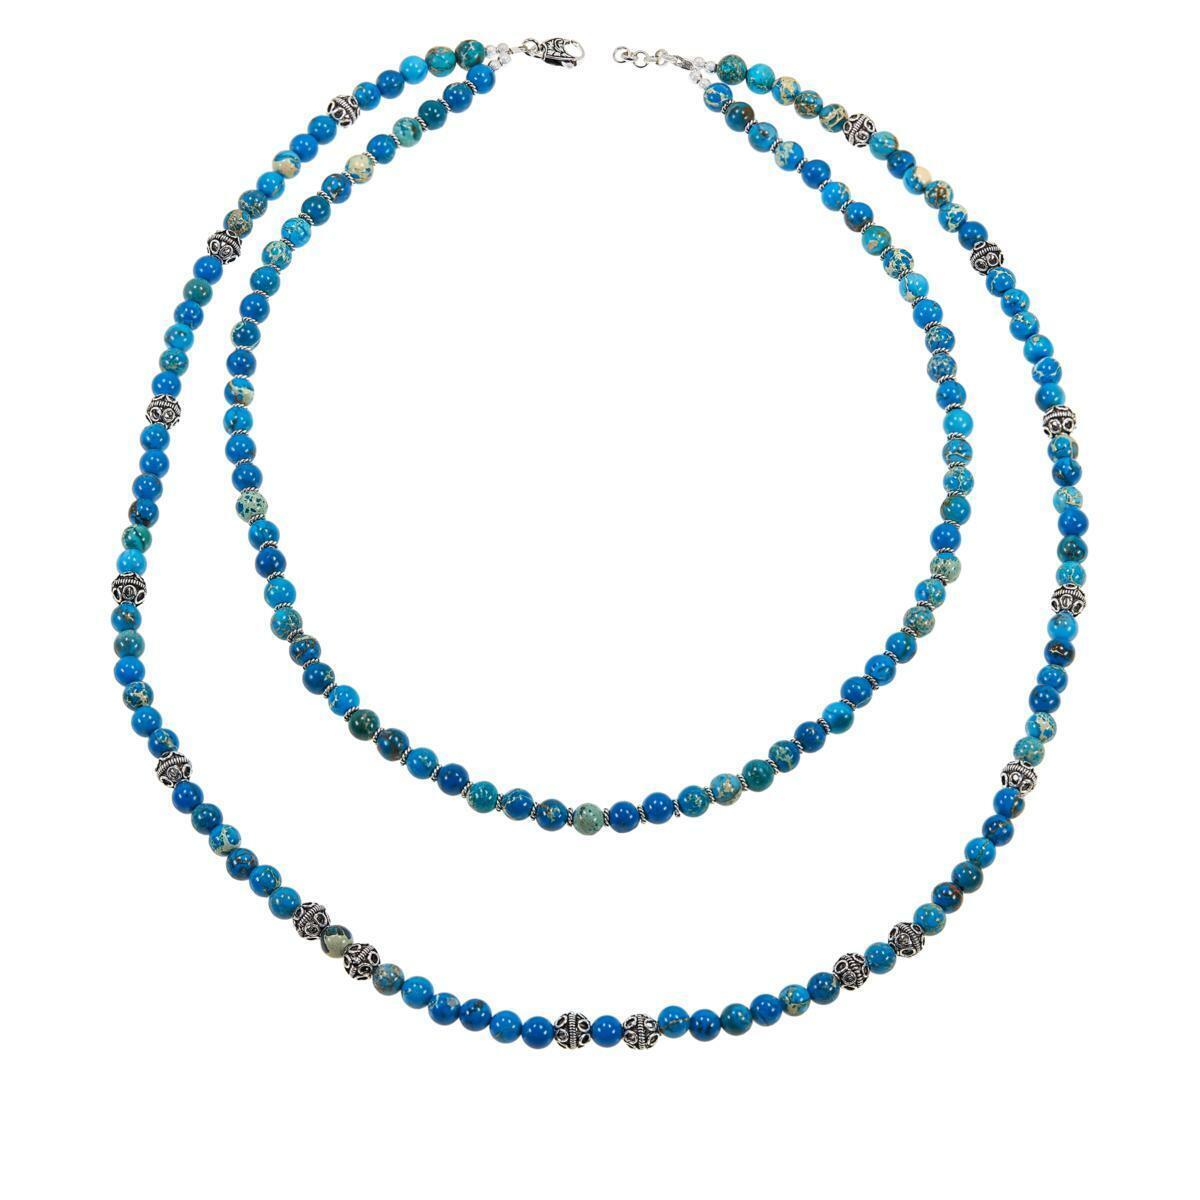 Ottoman Silver Jasper Blue 2-Strand Gemstone Bead Necklace, 19"L x 3/4"W with 3"